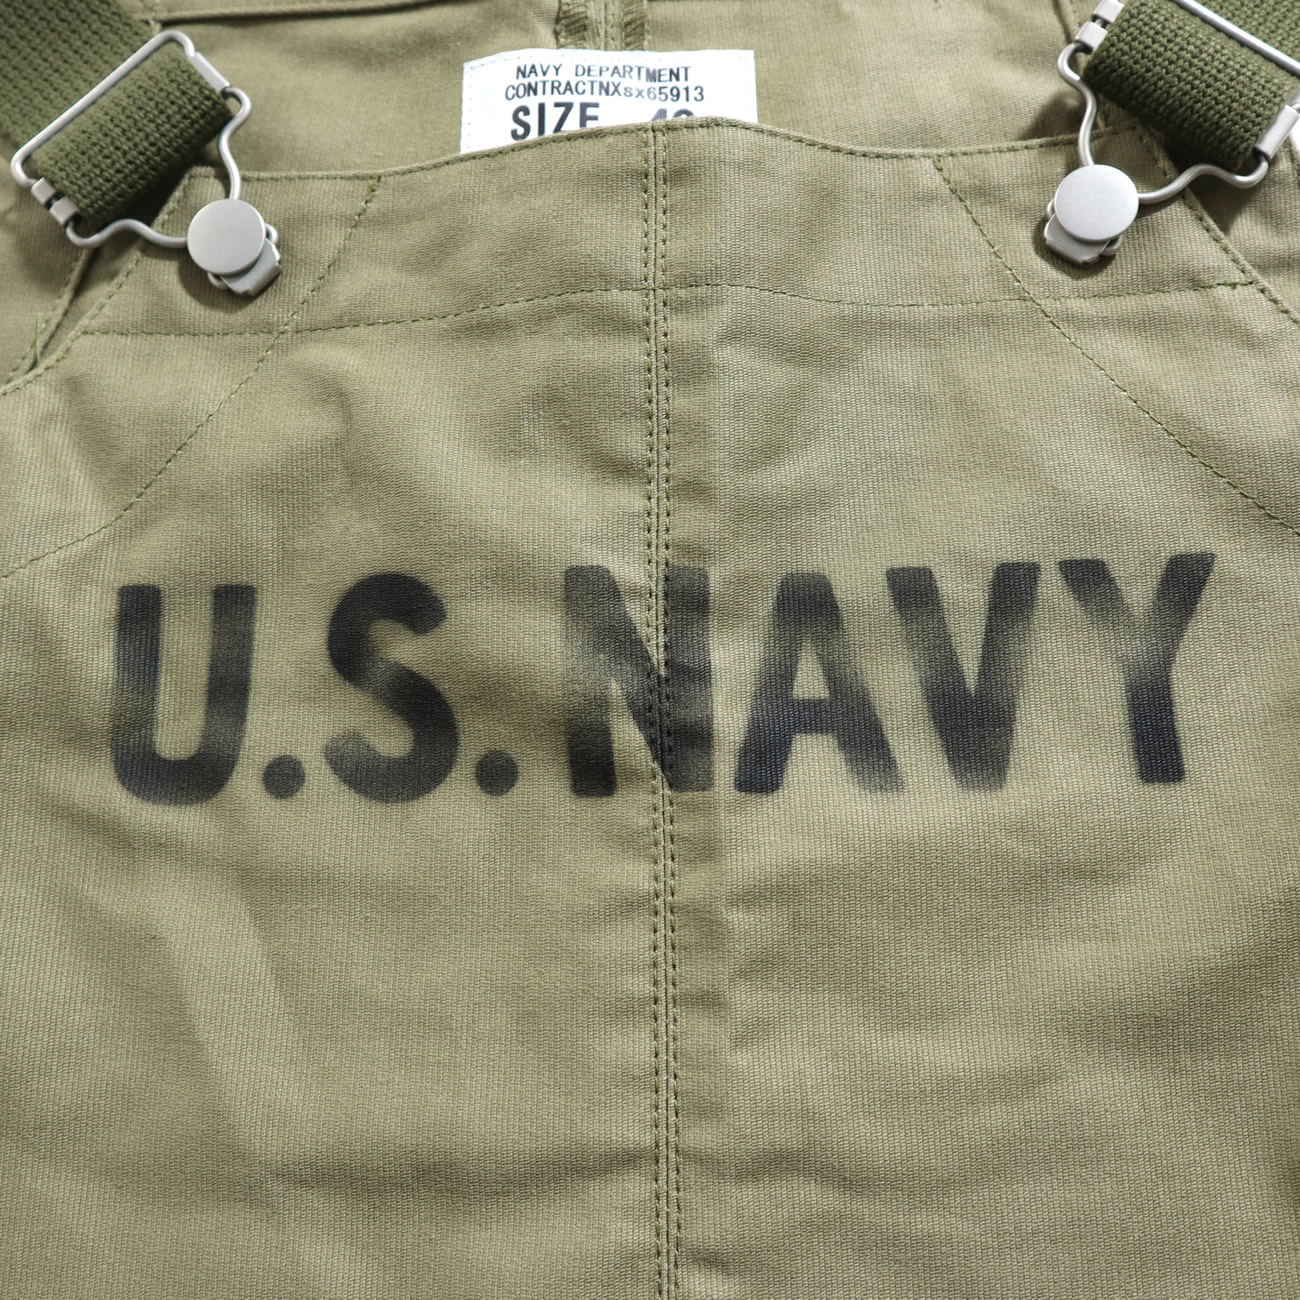 U.S. NAVYに採用されていたタフなパンツ『デッキパンツ(後期モデル 